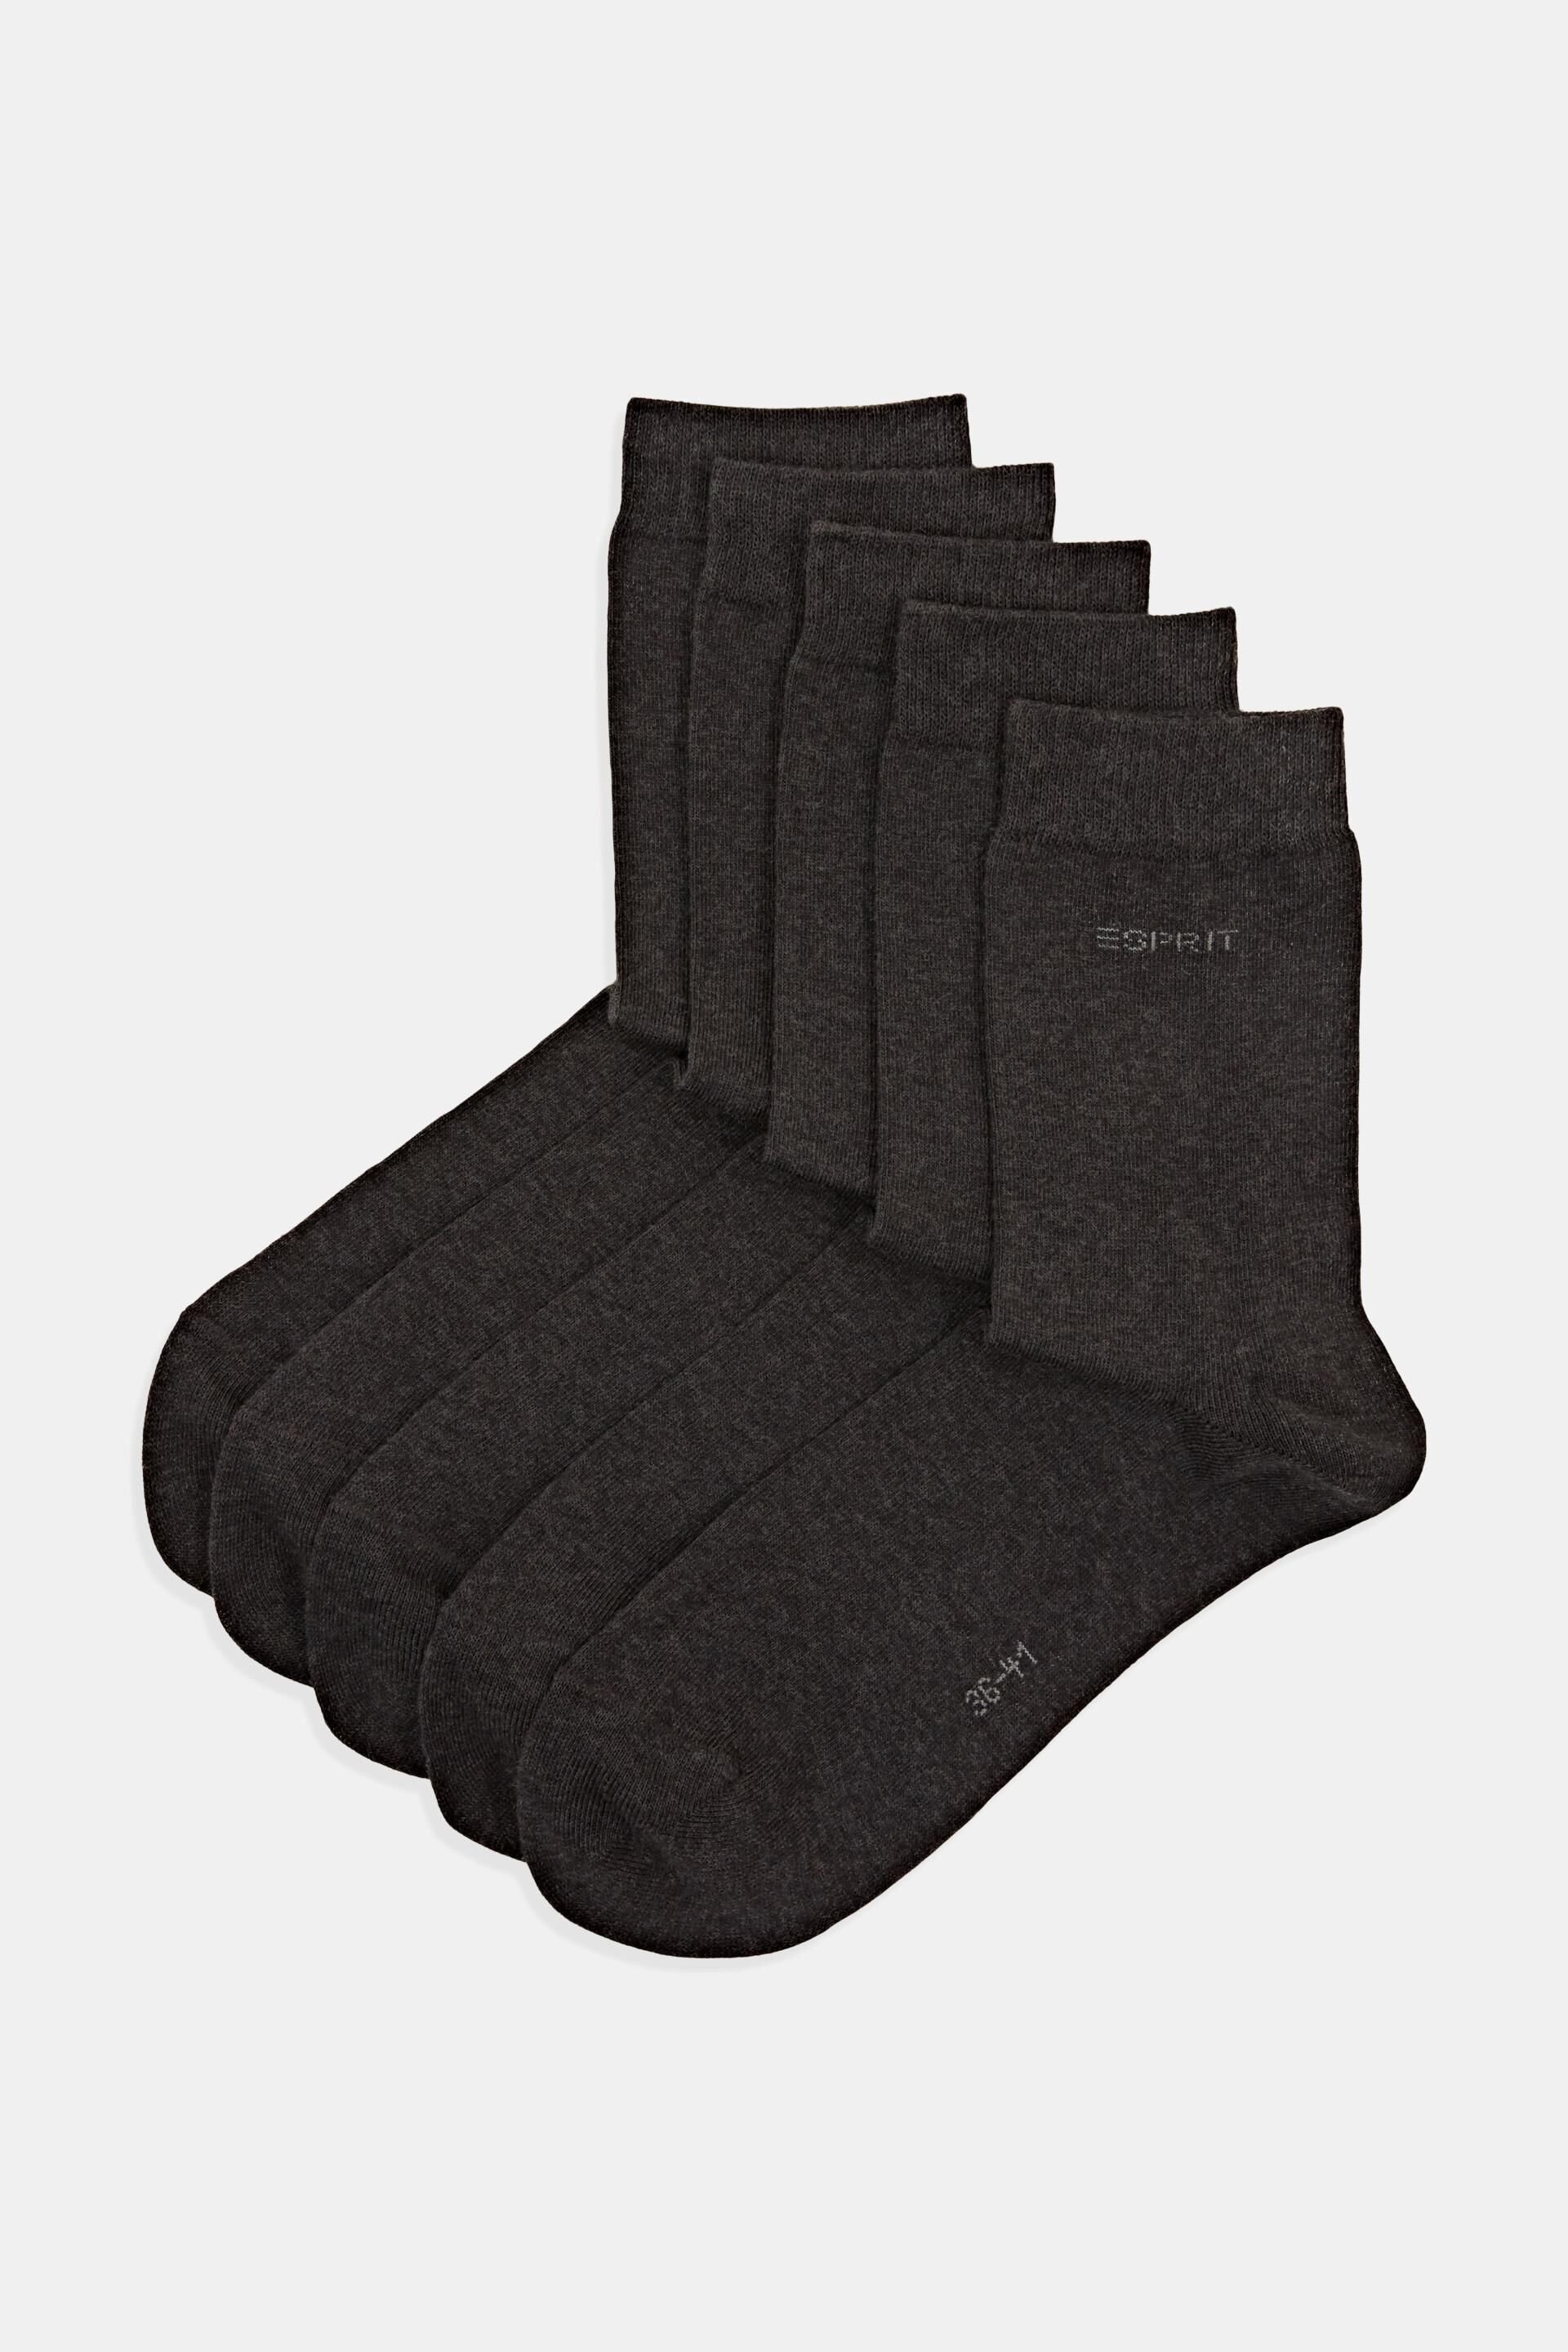 Pack of 5 plain socks, organic cotton